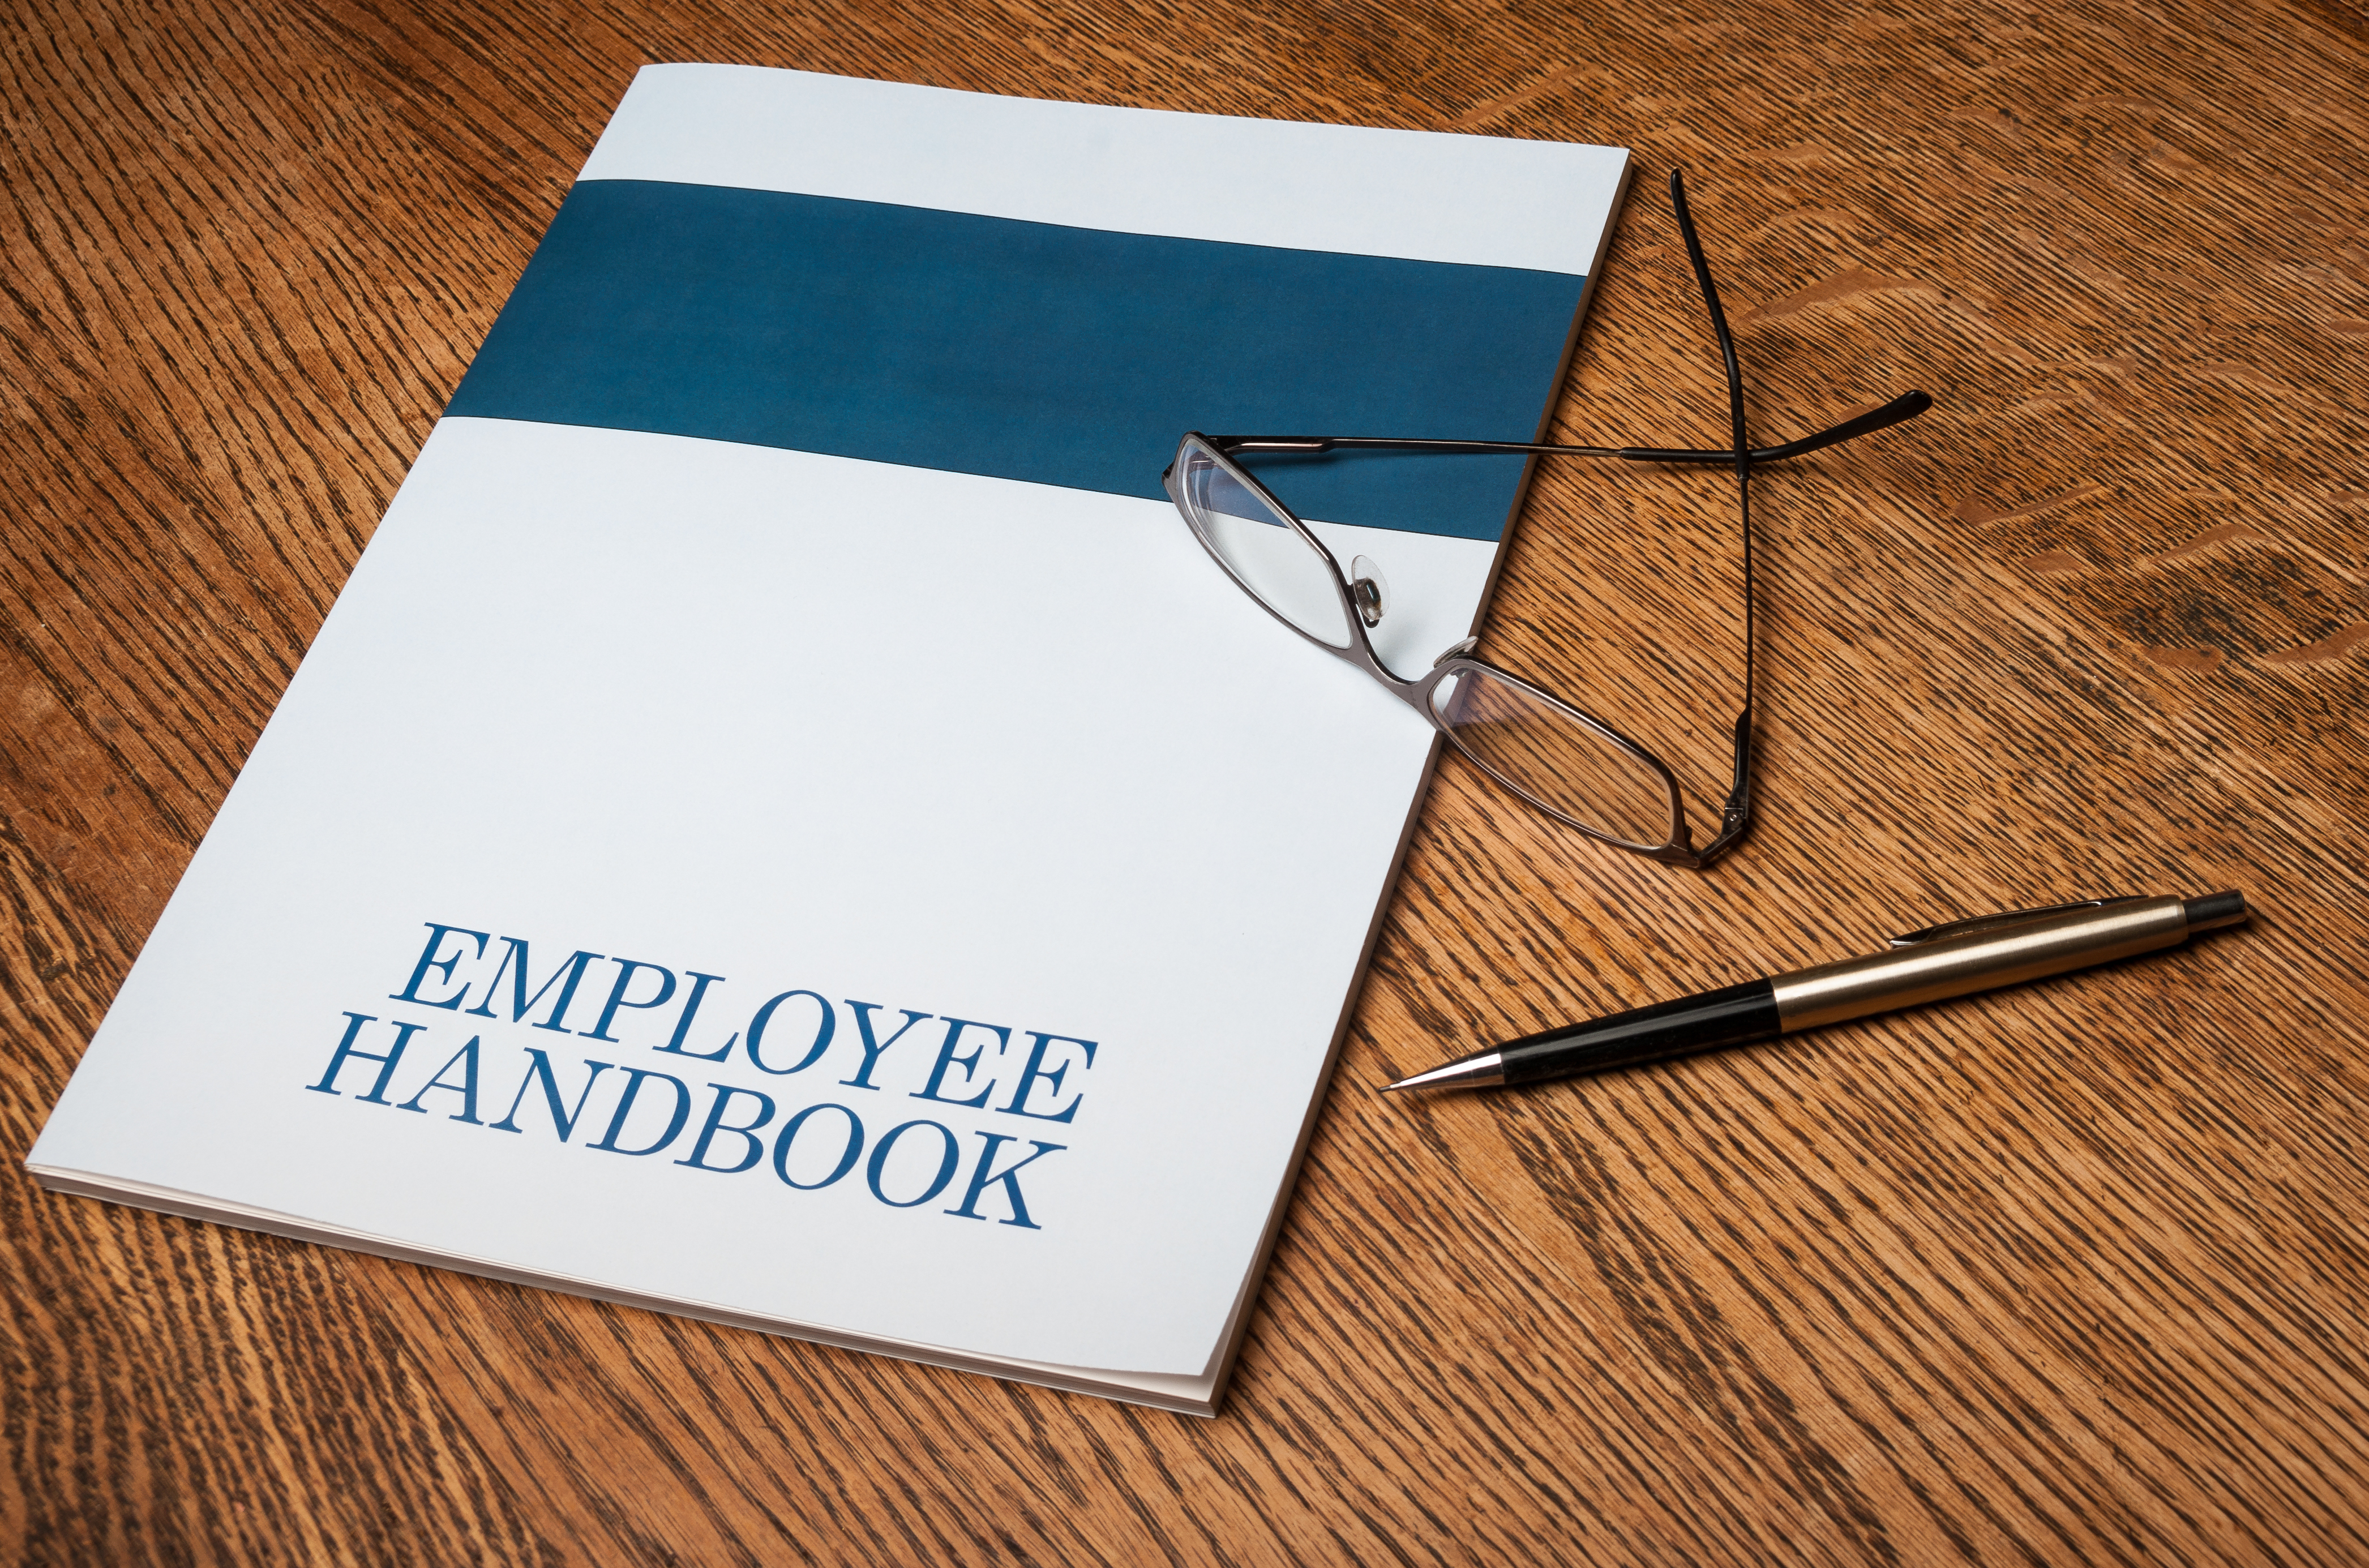 employee handbook, pen, glasses on a wooden surface